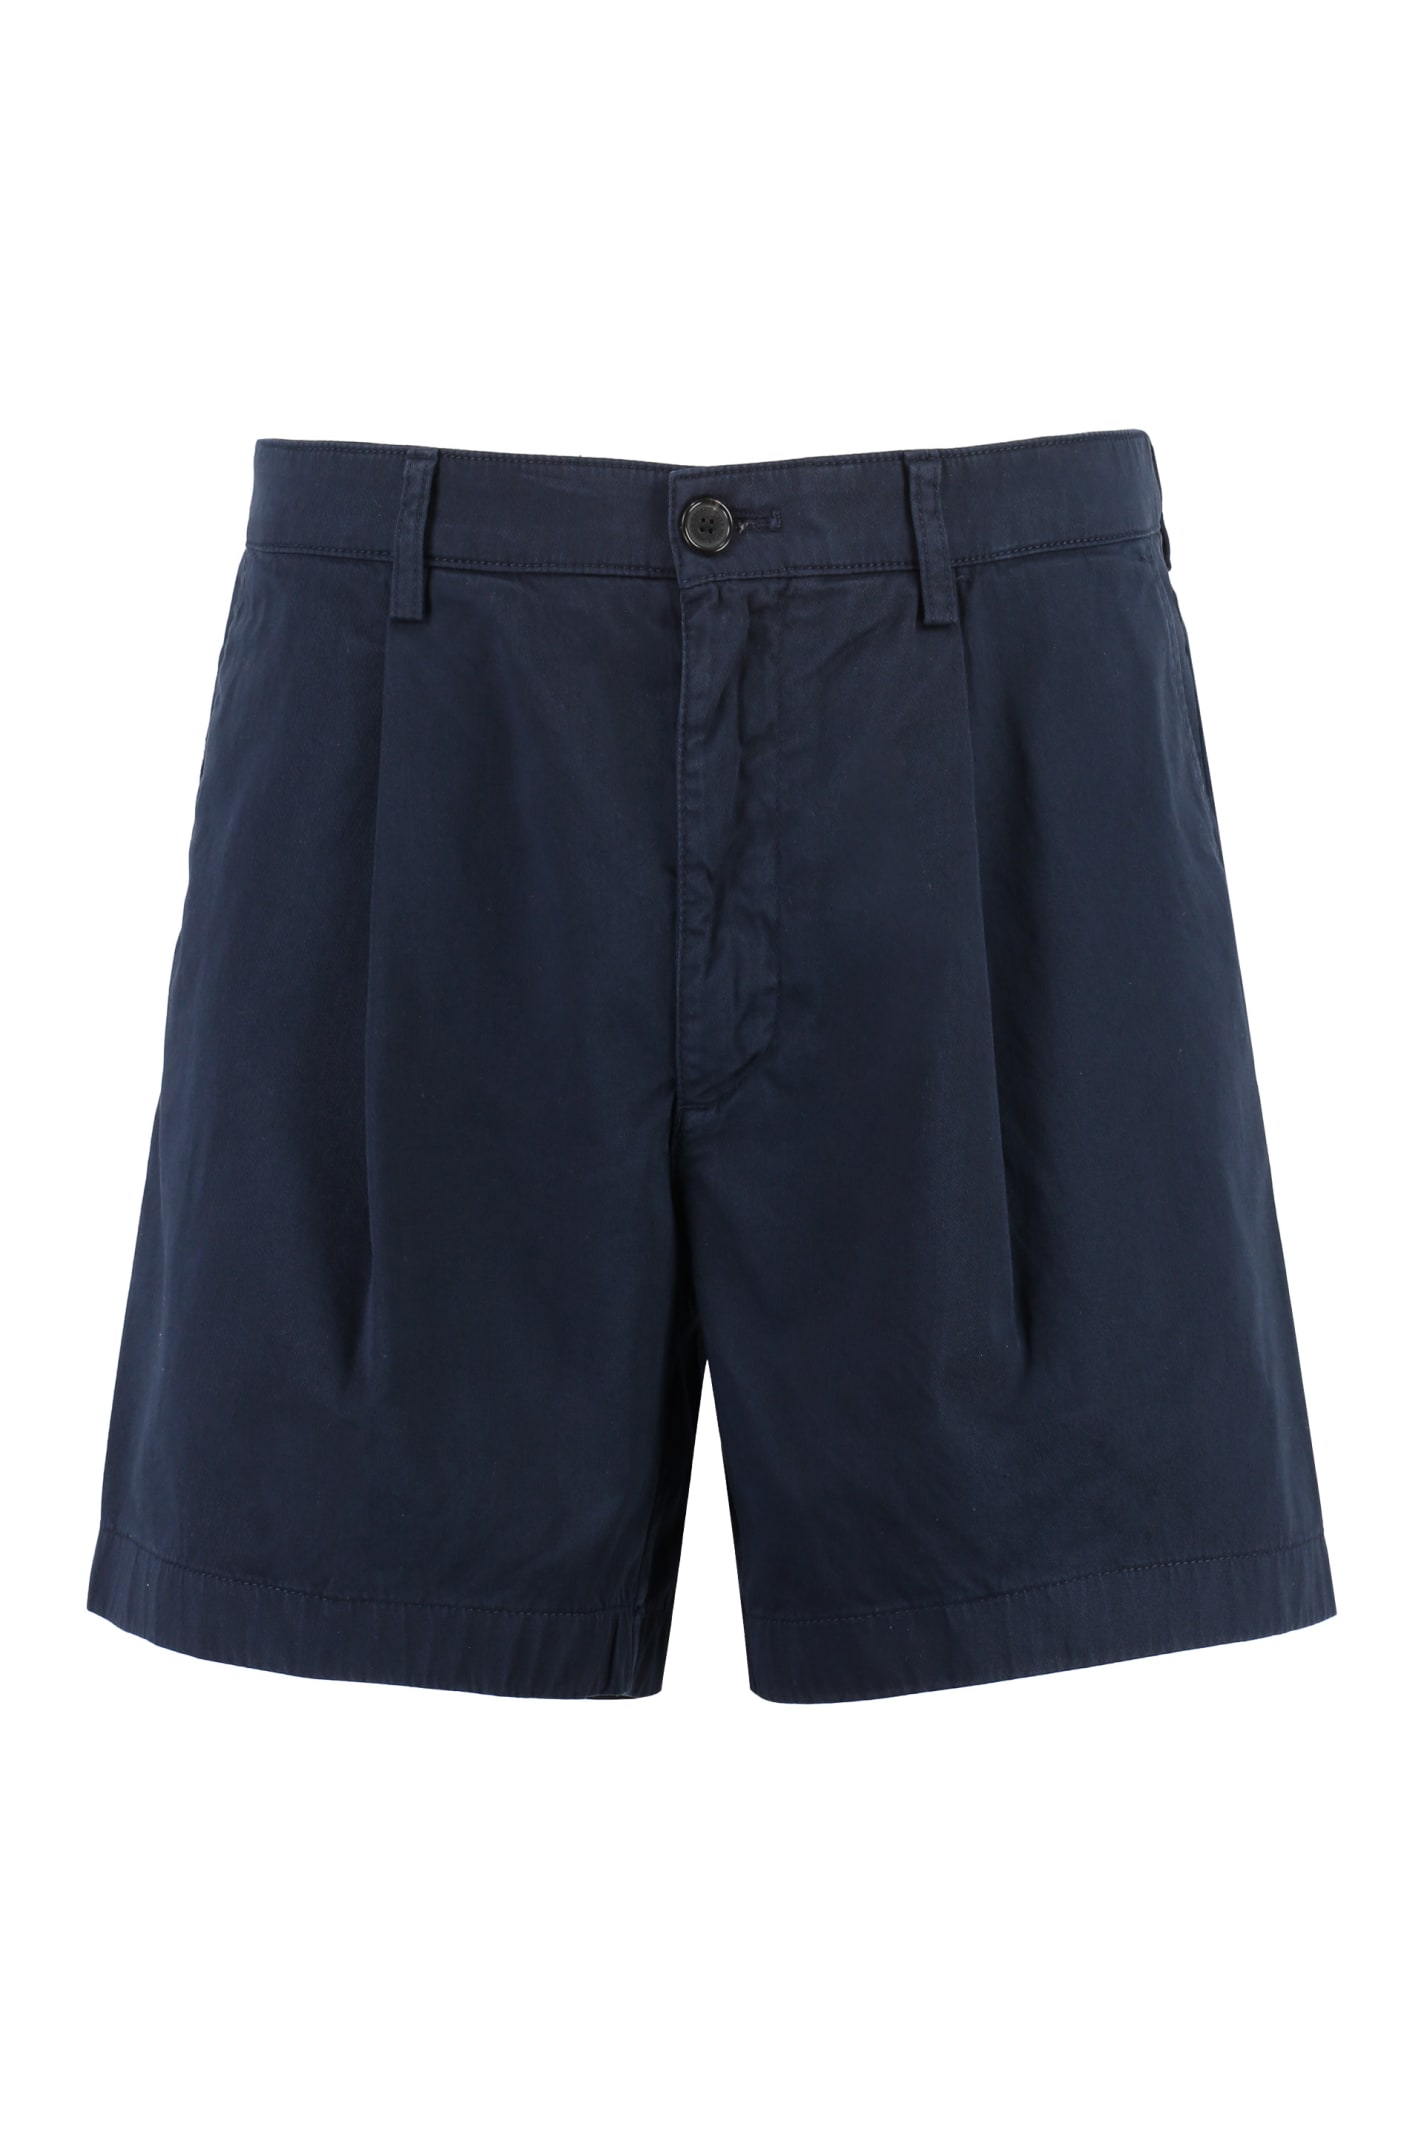 Department Five Cotton Bermuda Shorts